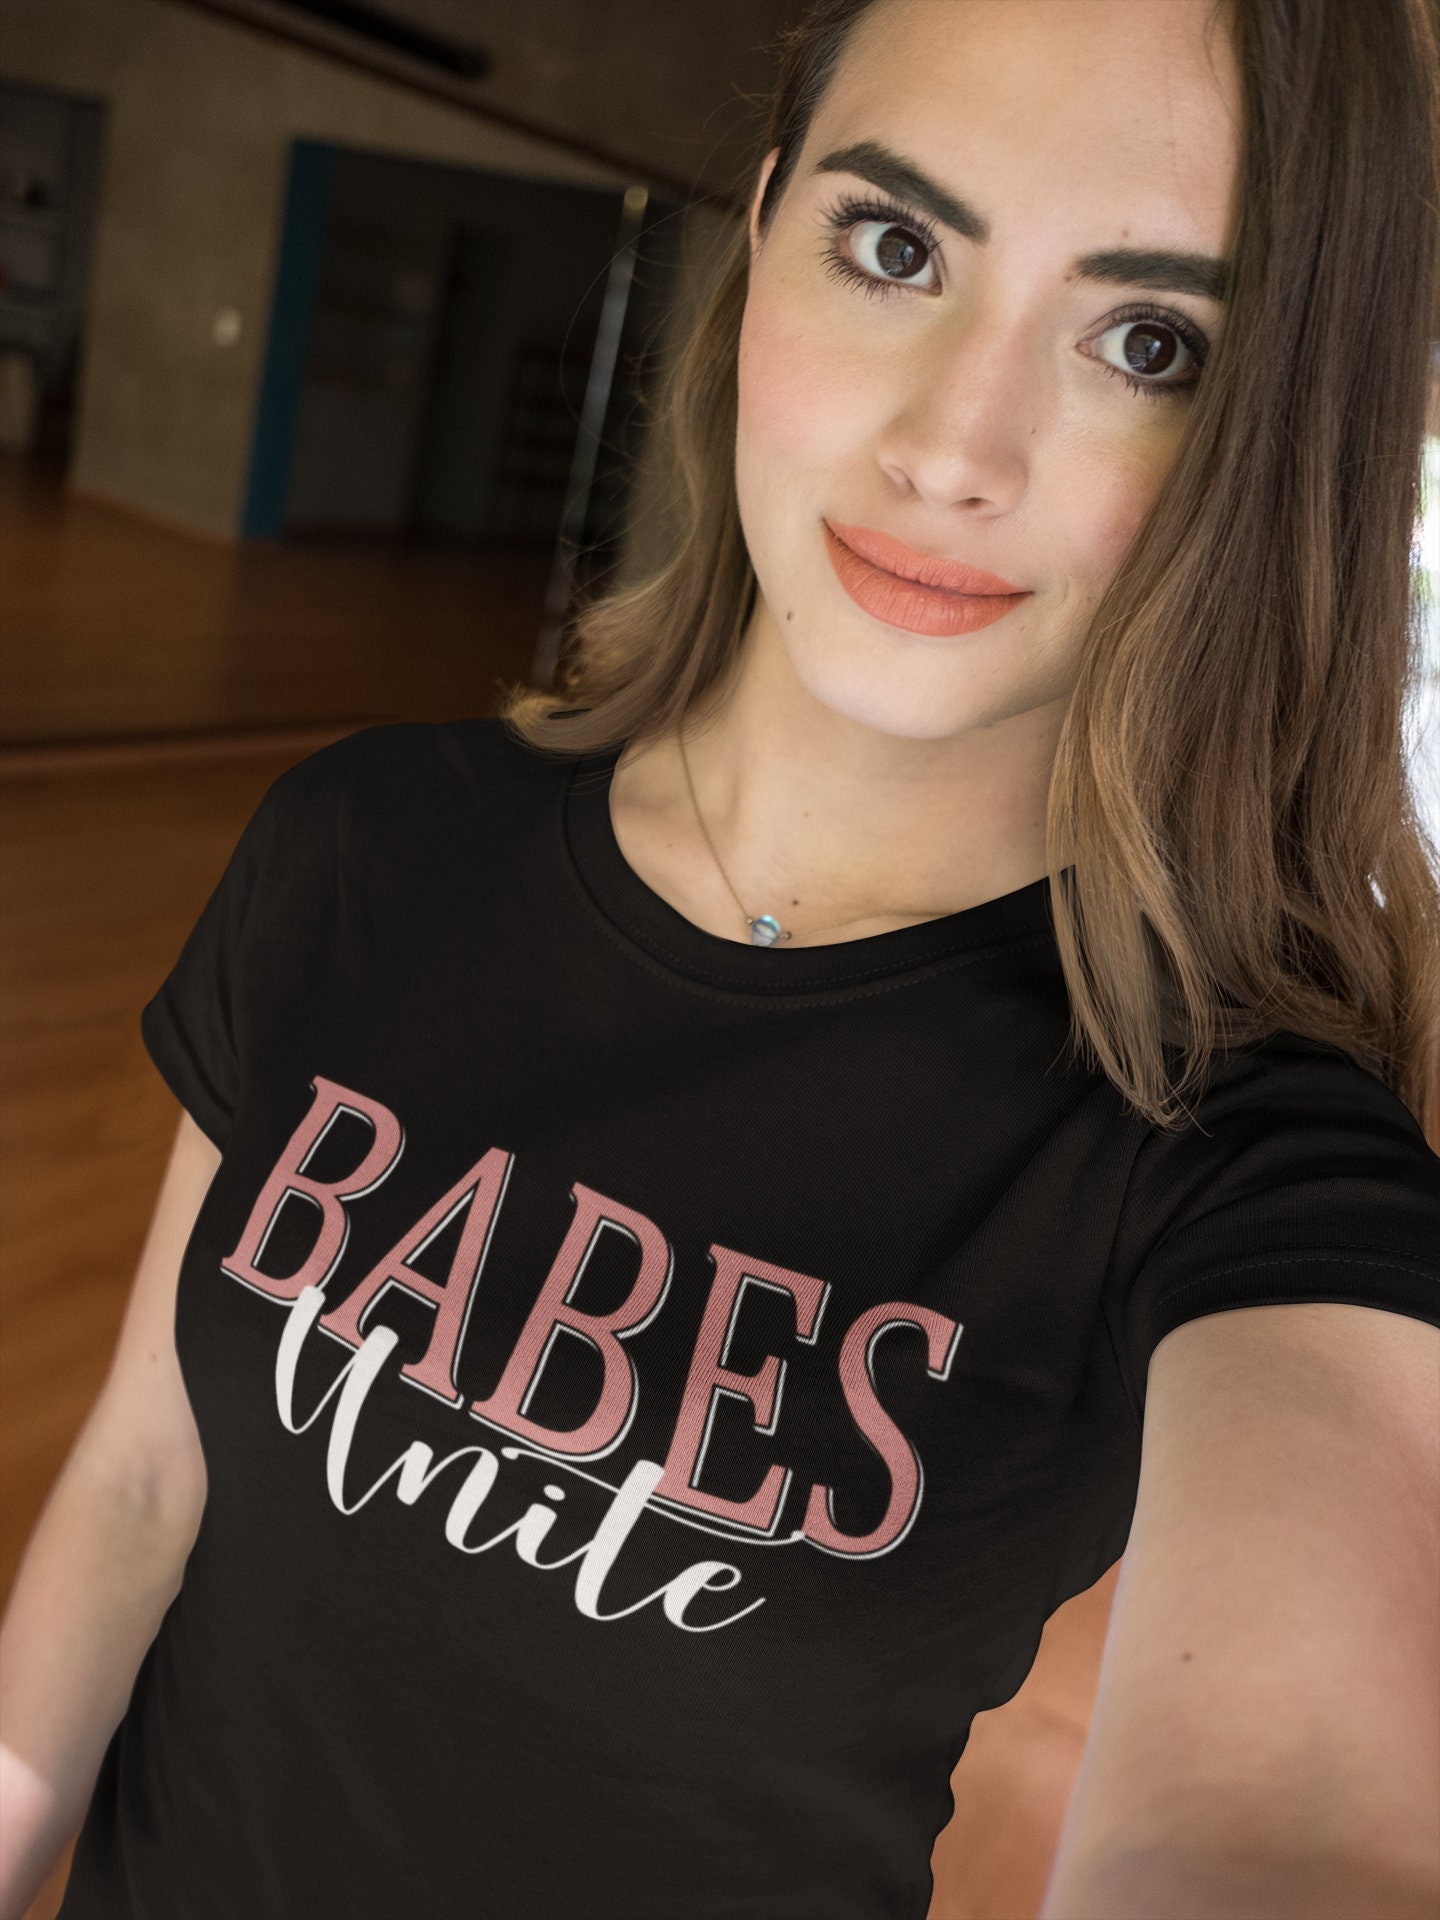 Babes Unite Feminist Shirt Feminist T-Shirt Equal Rights | Etsy